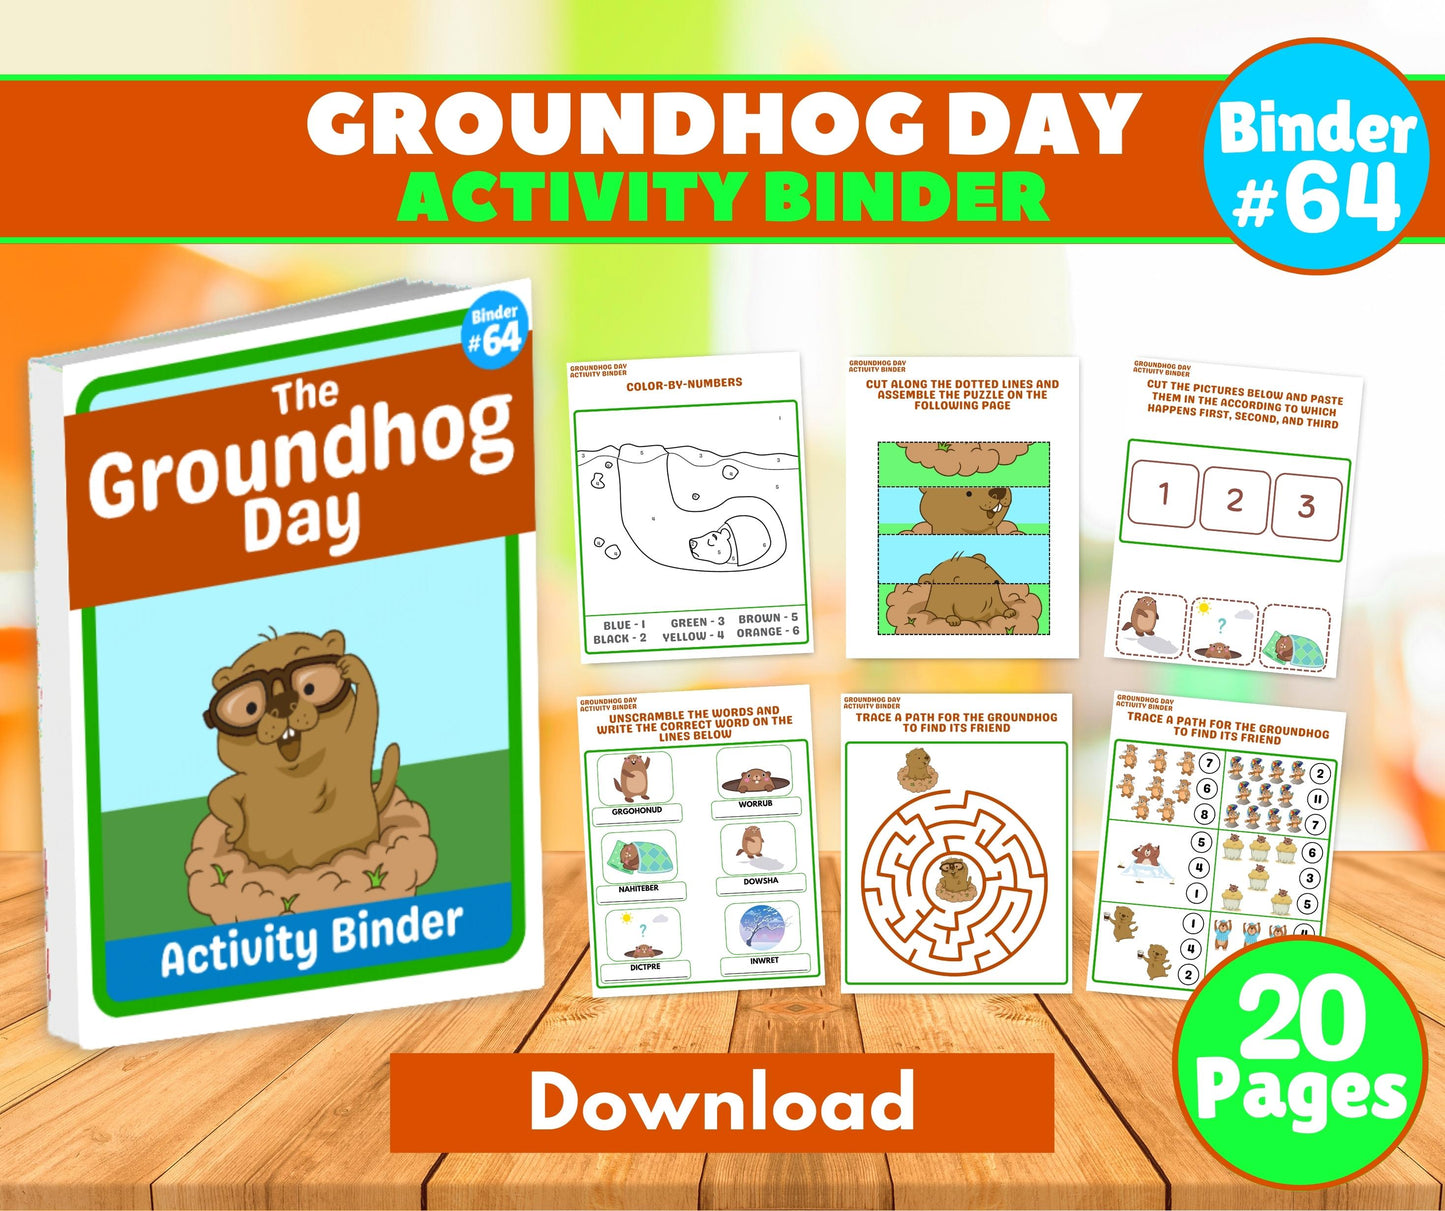 Groundhog Day Activity Binder - Download